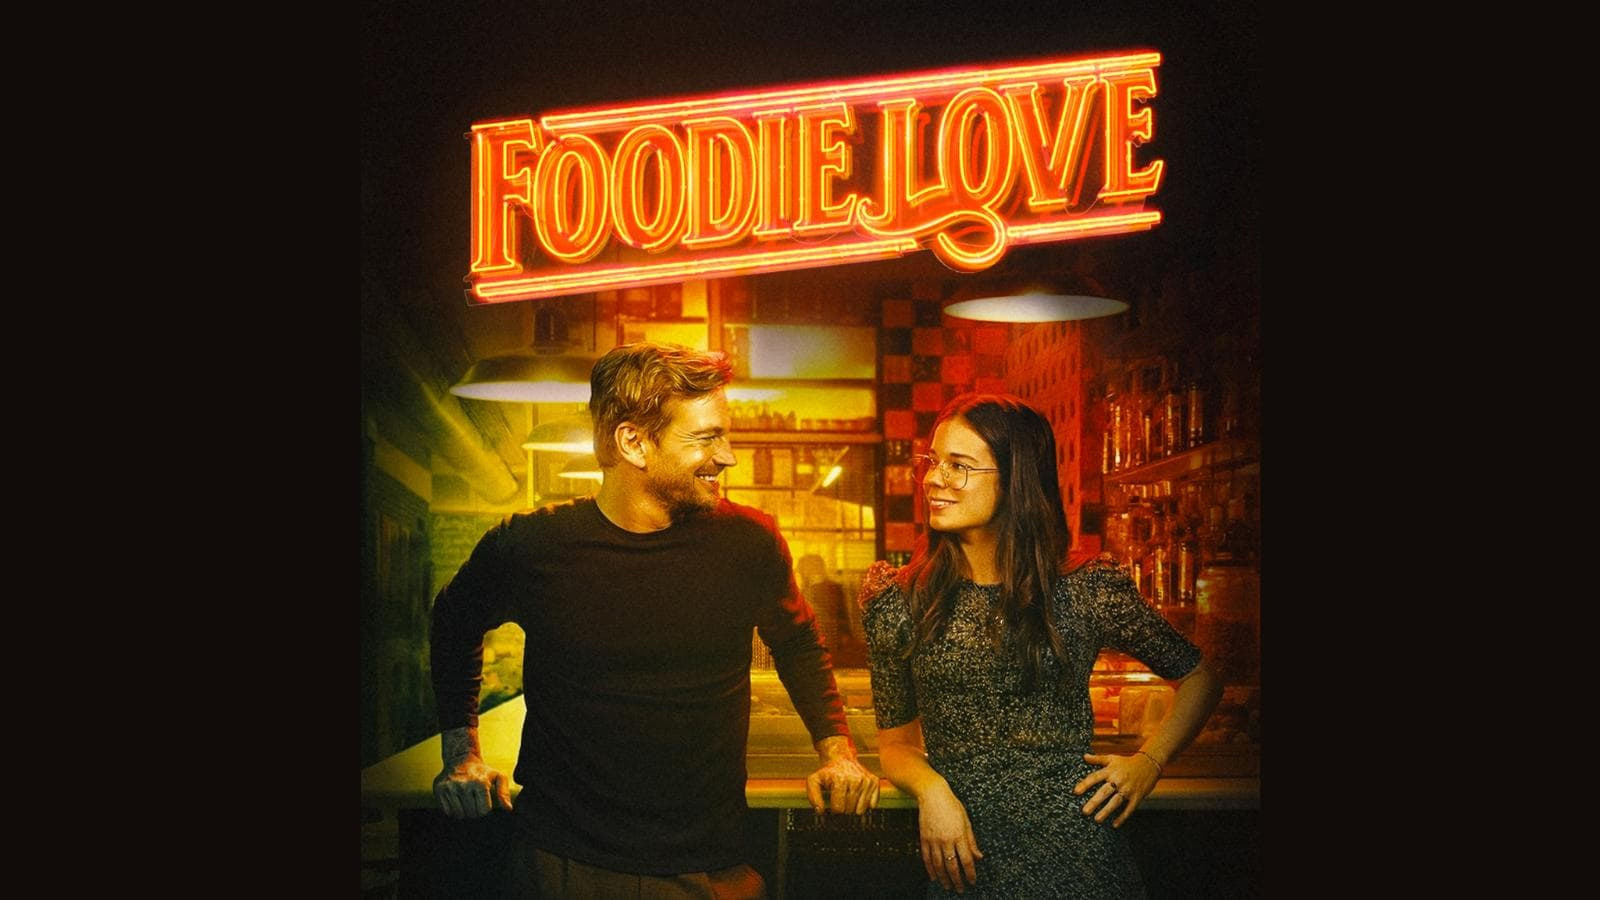 Foodie Love [Ufficio Stampa Rai]